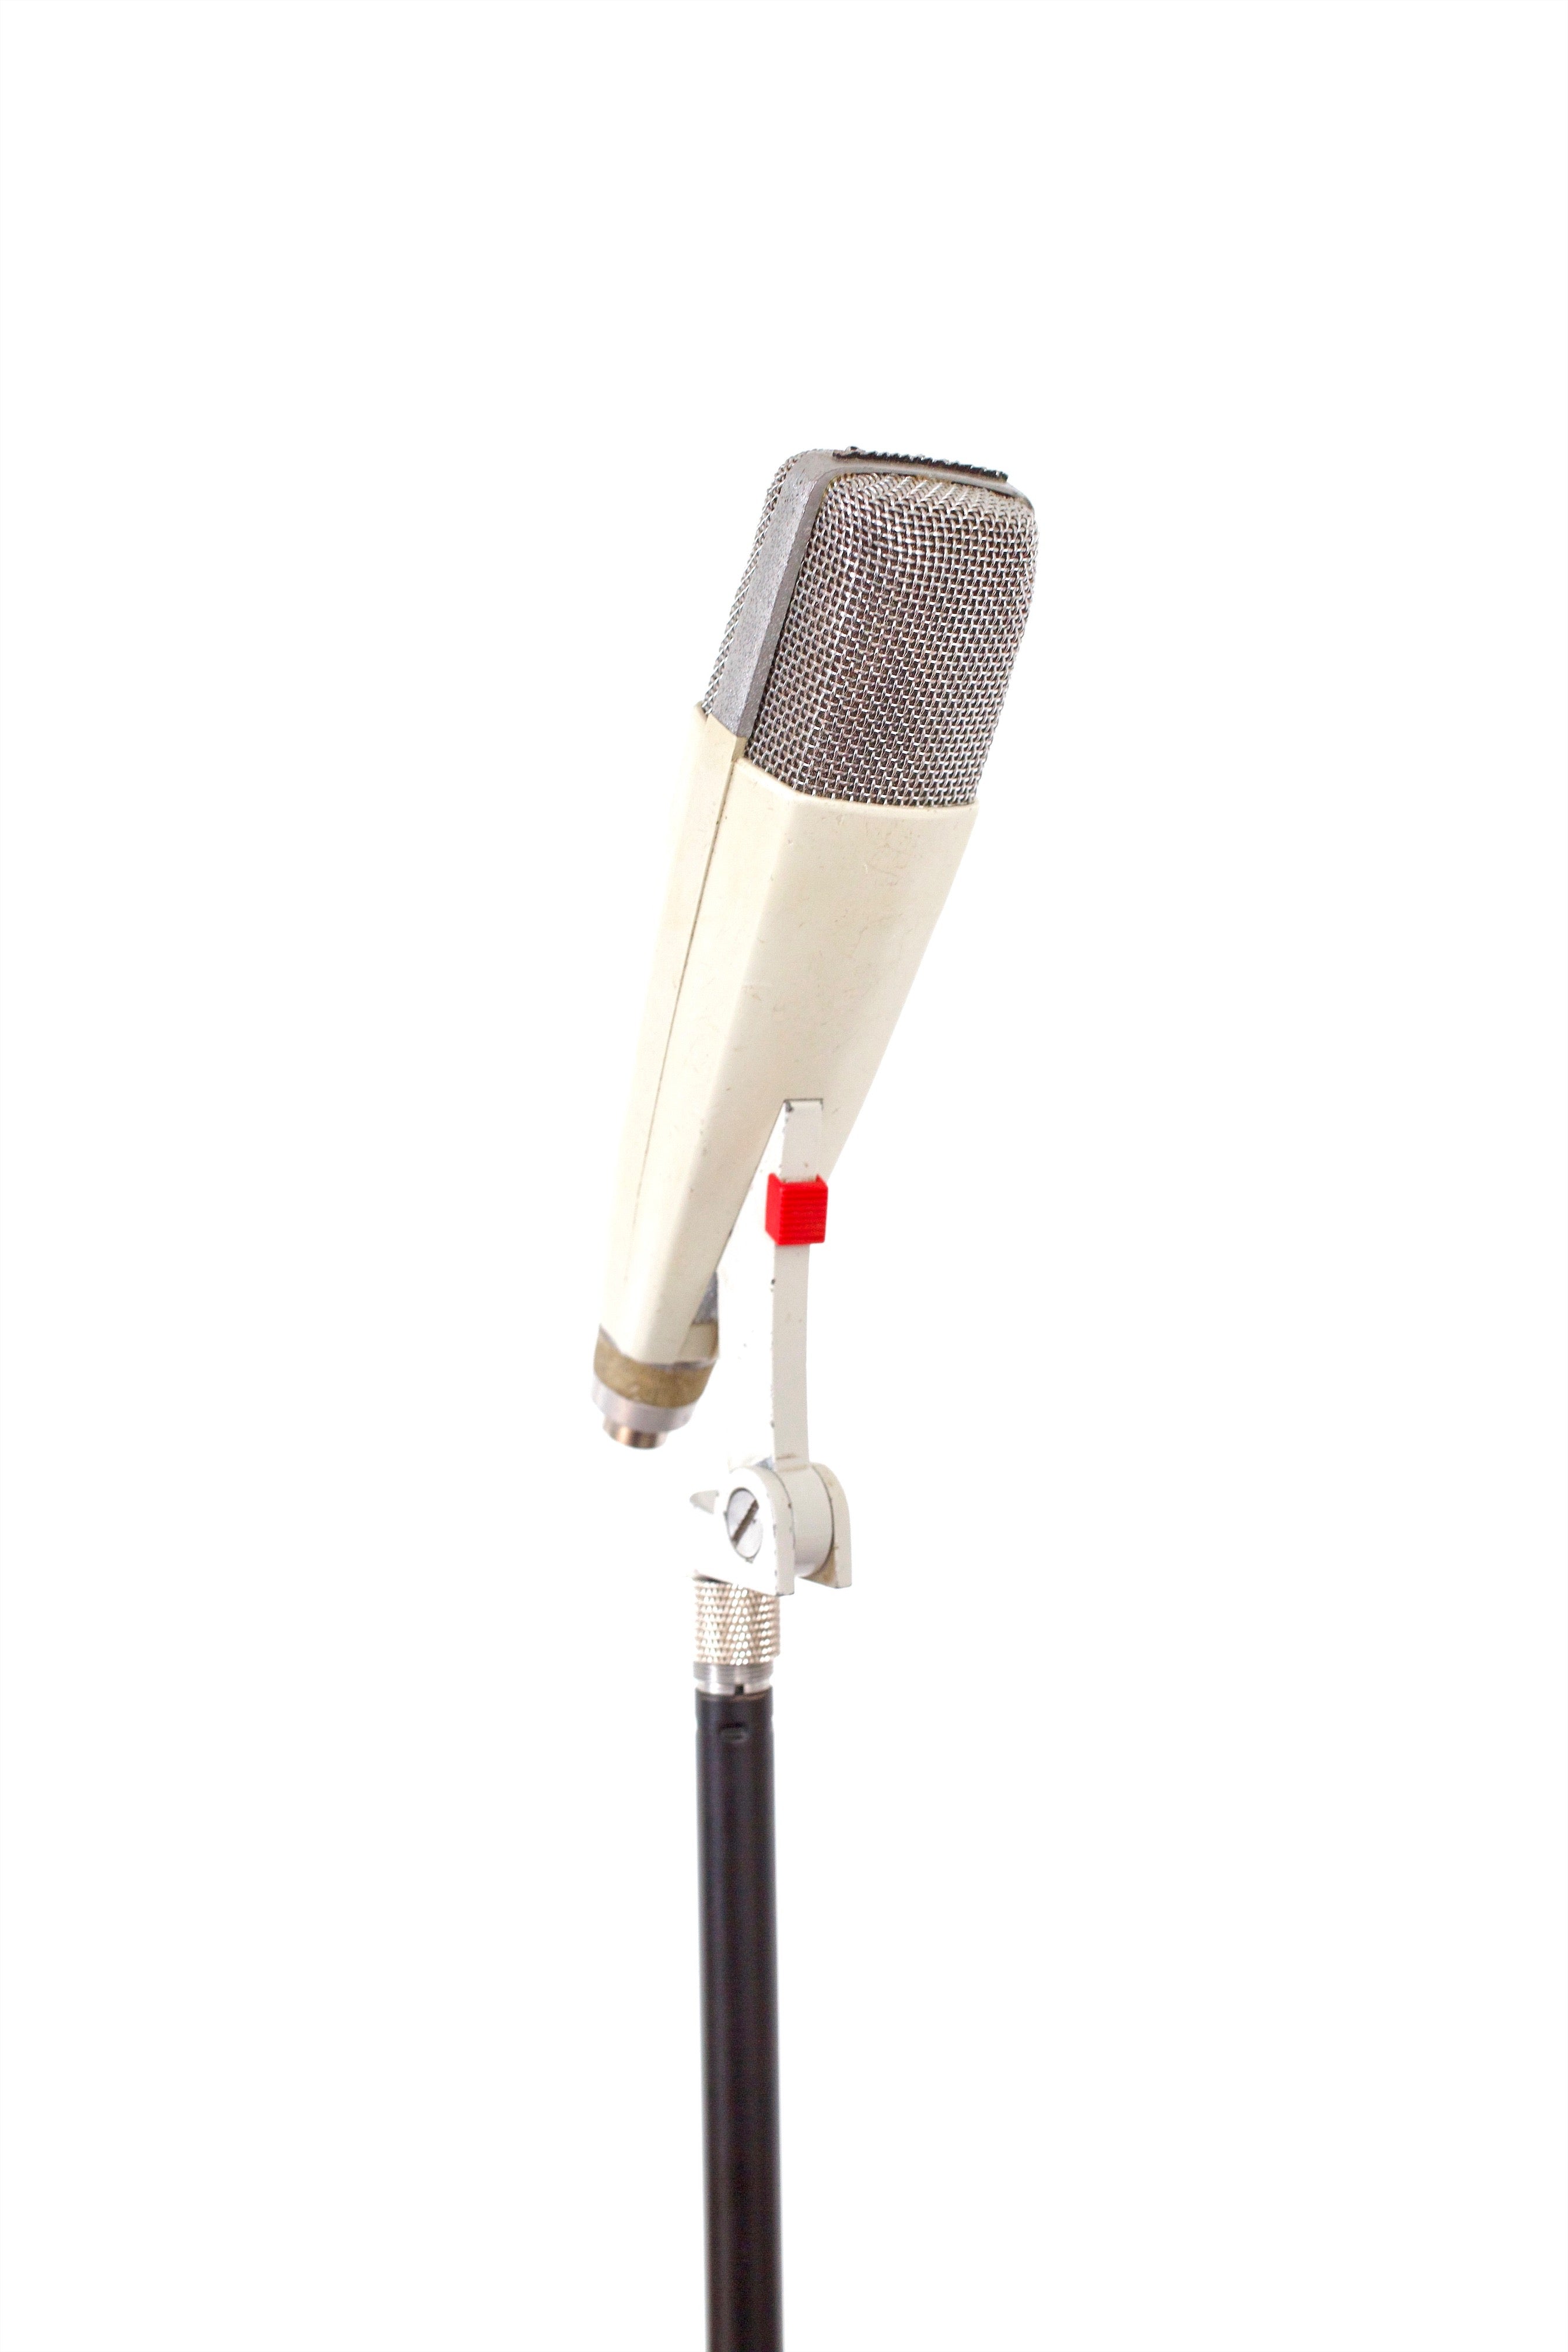 Sennheiser MD421 Dynamic Microphone